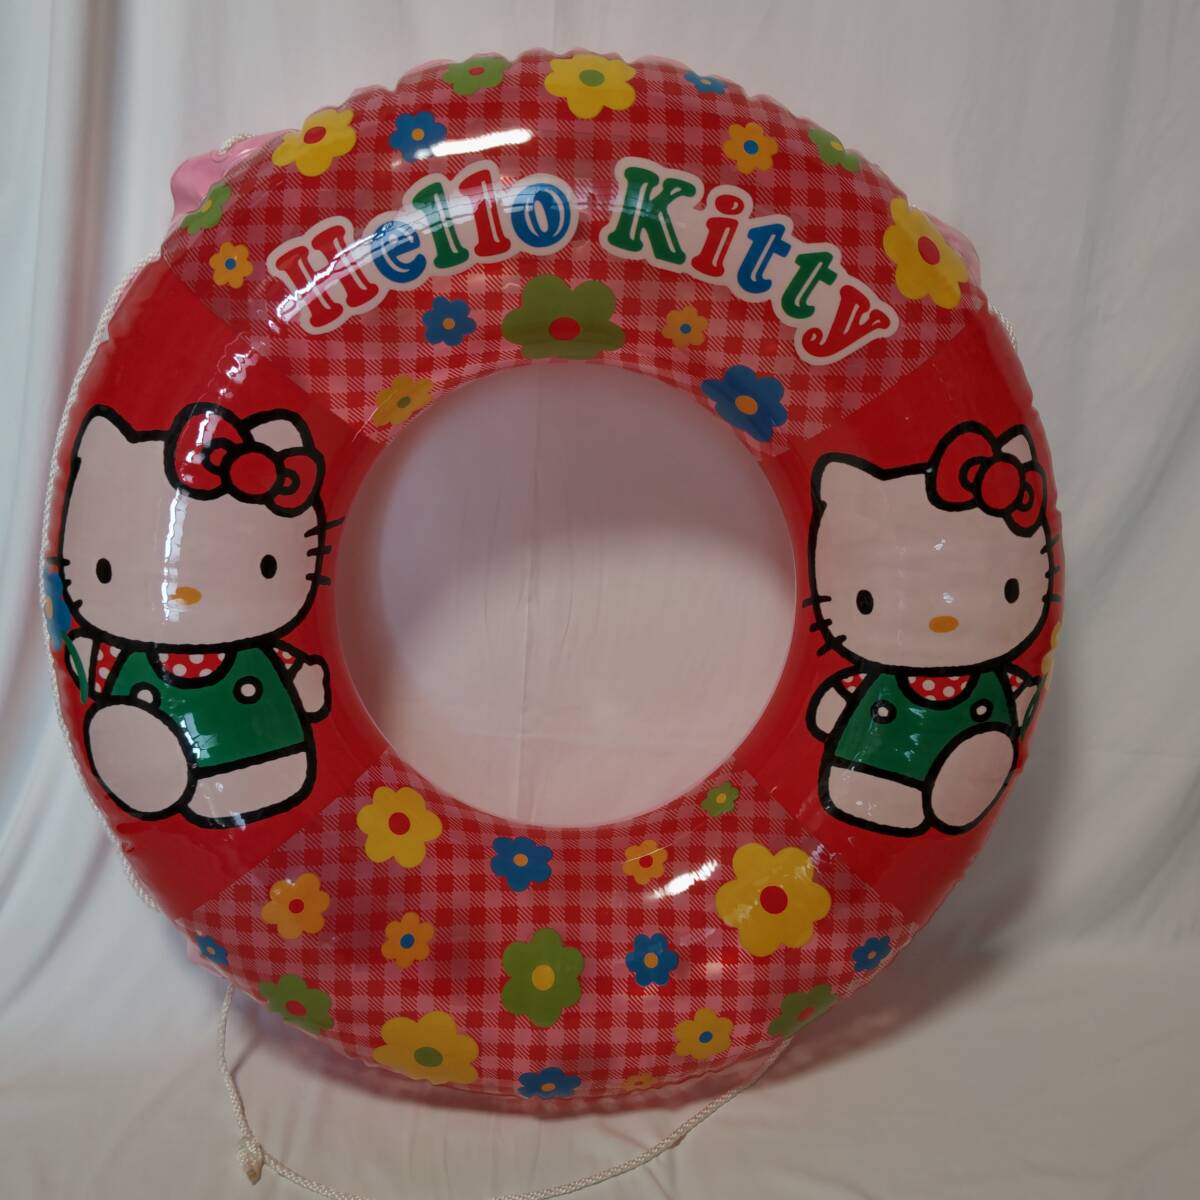  Hello Kitty надувной круг 90cm 1992 год модели 